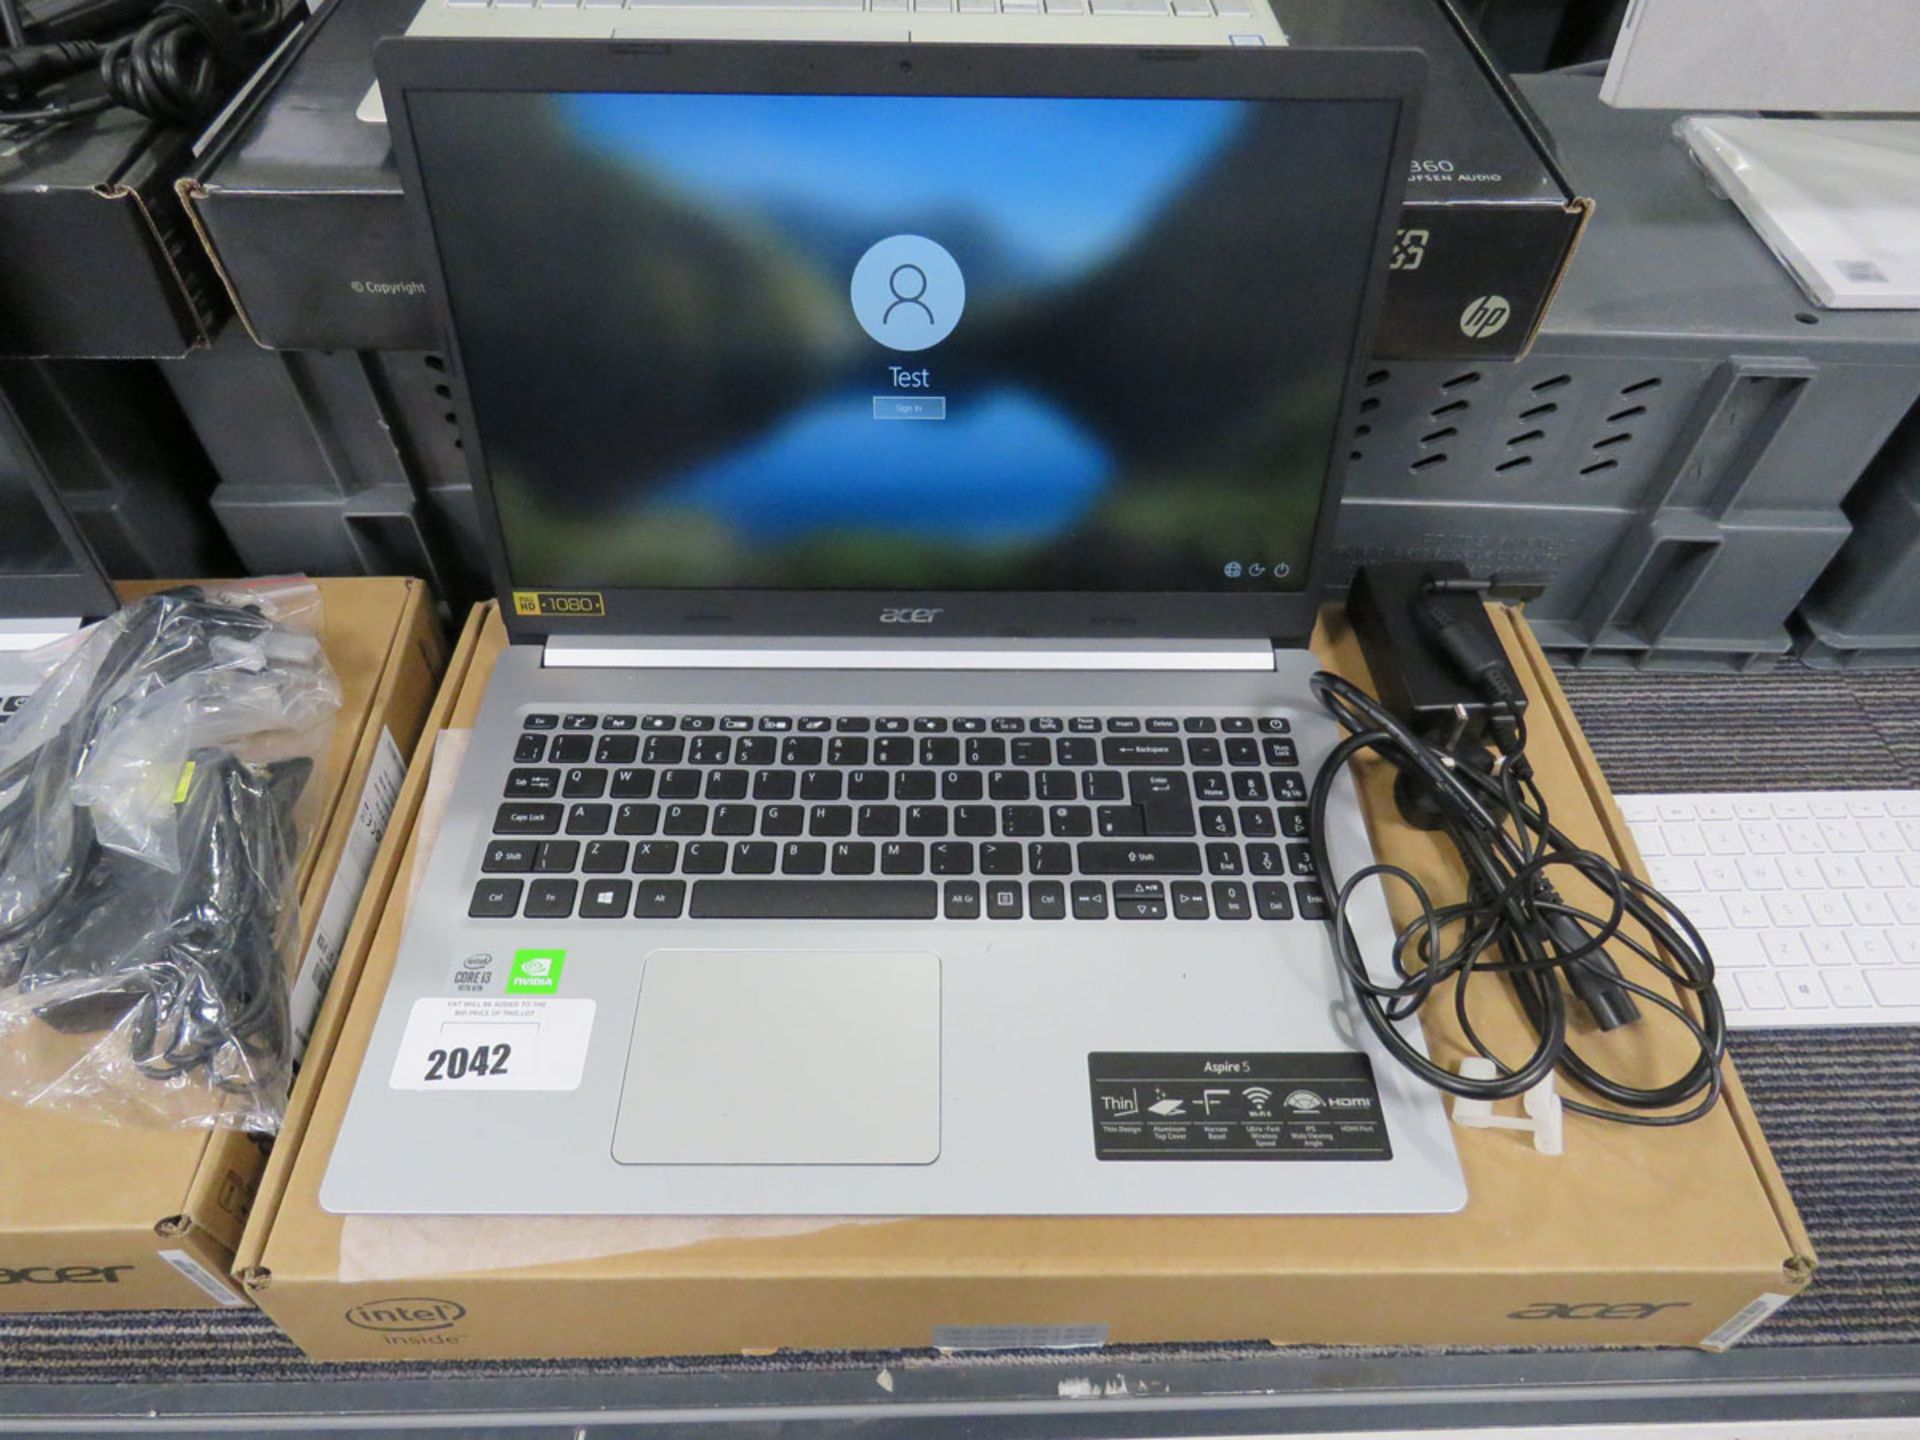 Acer Aspire 5 laptop core i3 10th gen processor, 4gb ram, 256gb storage, Windows 10 installed, power